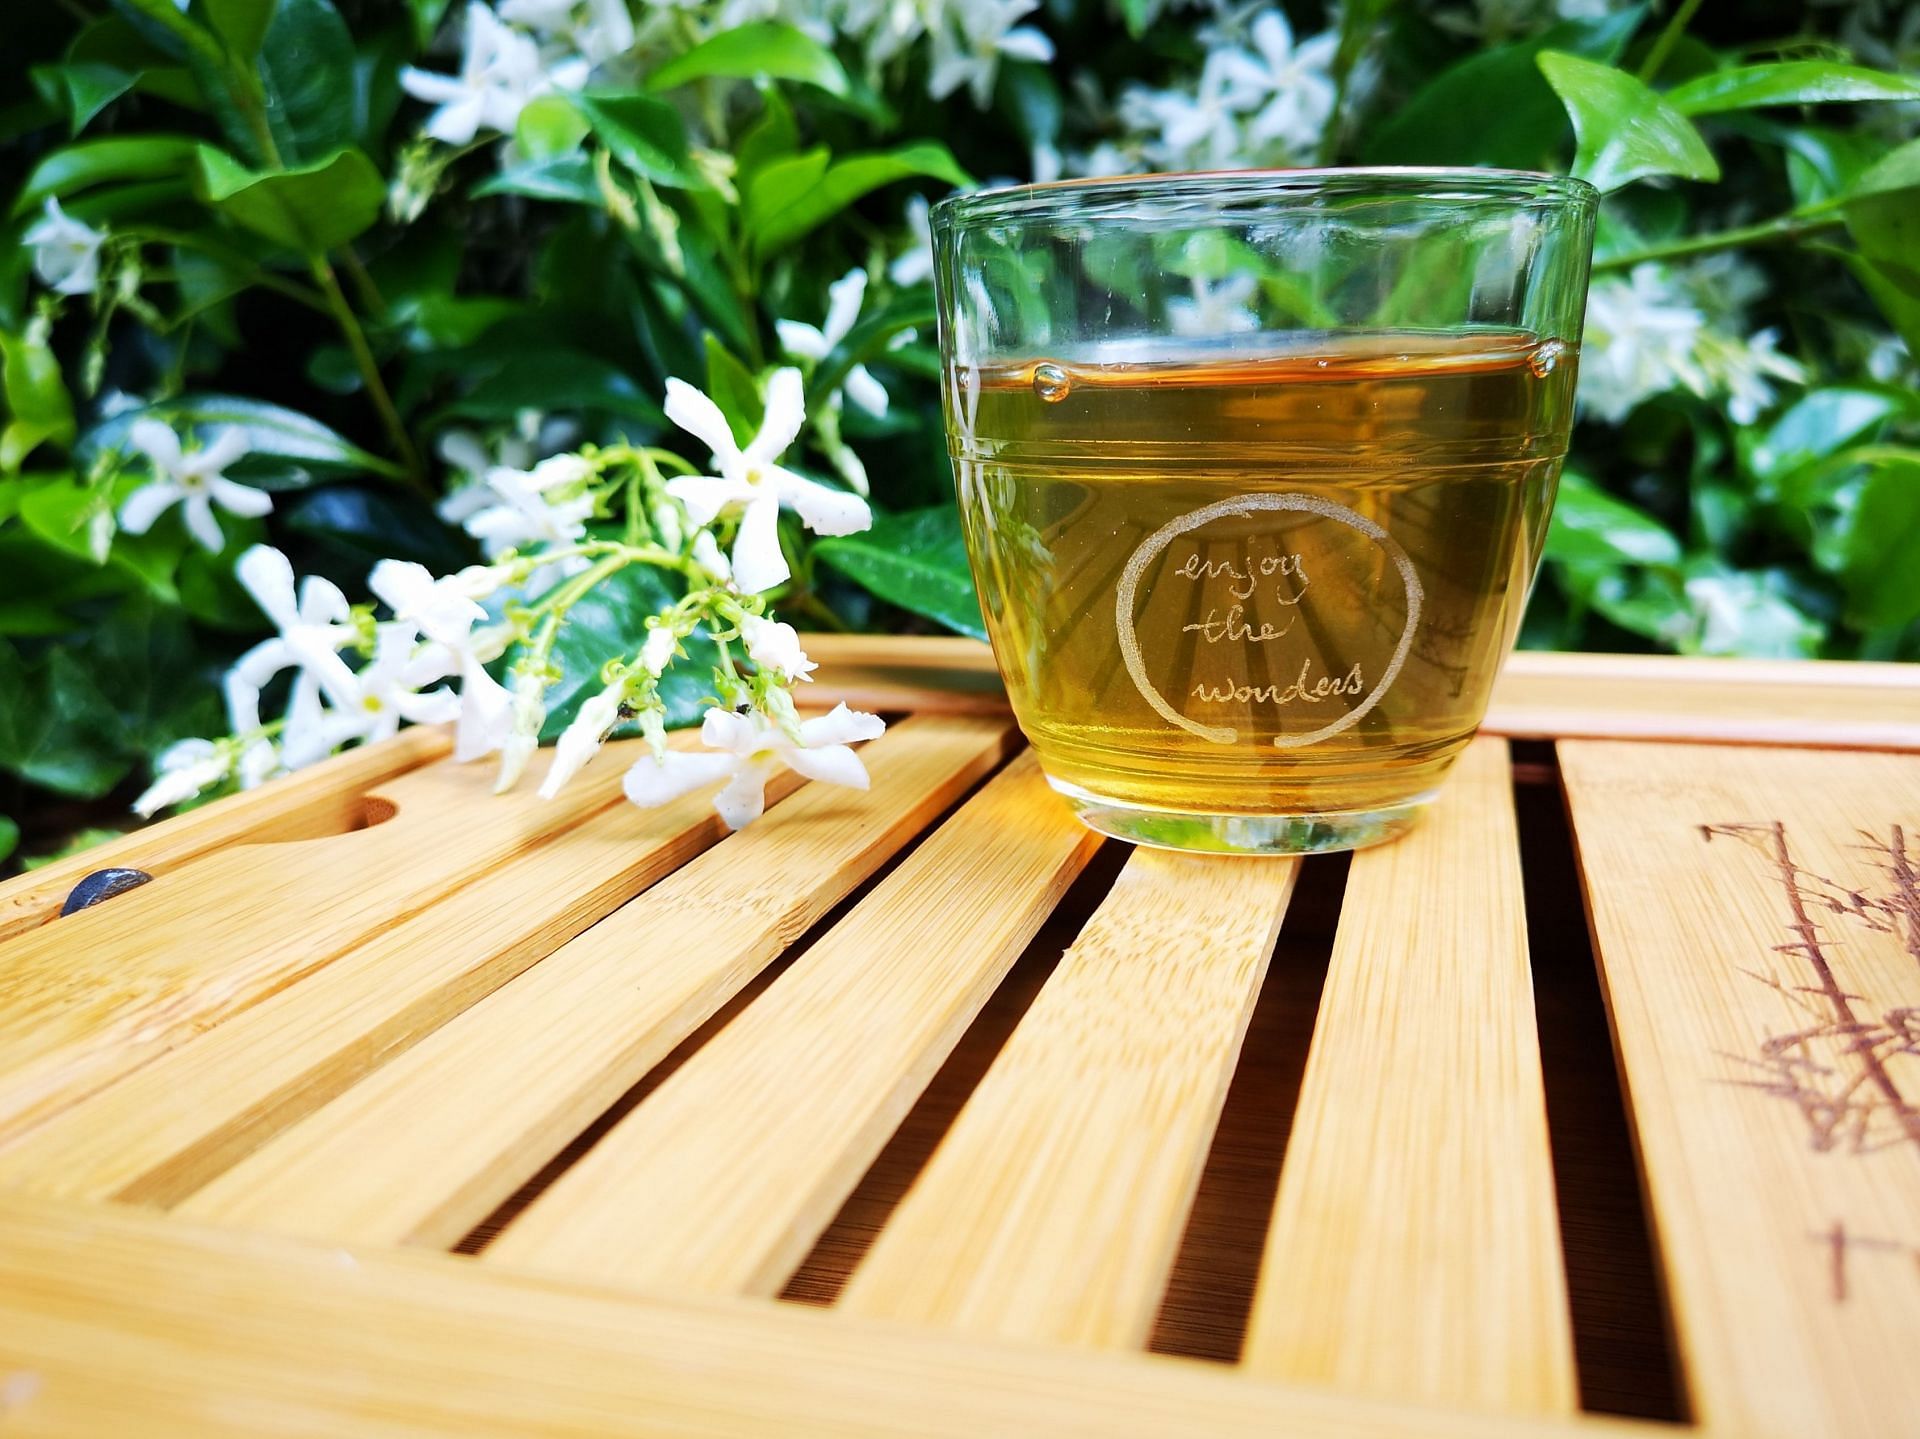 Herbs can make the best tea for sick people. (Image via Unsplash/Verena Bottcher)